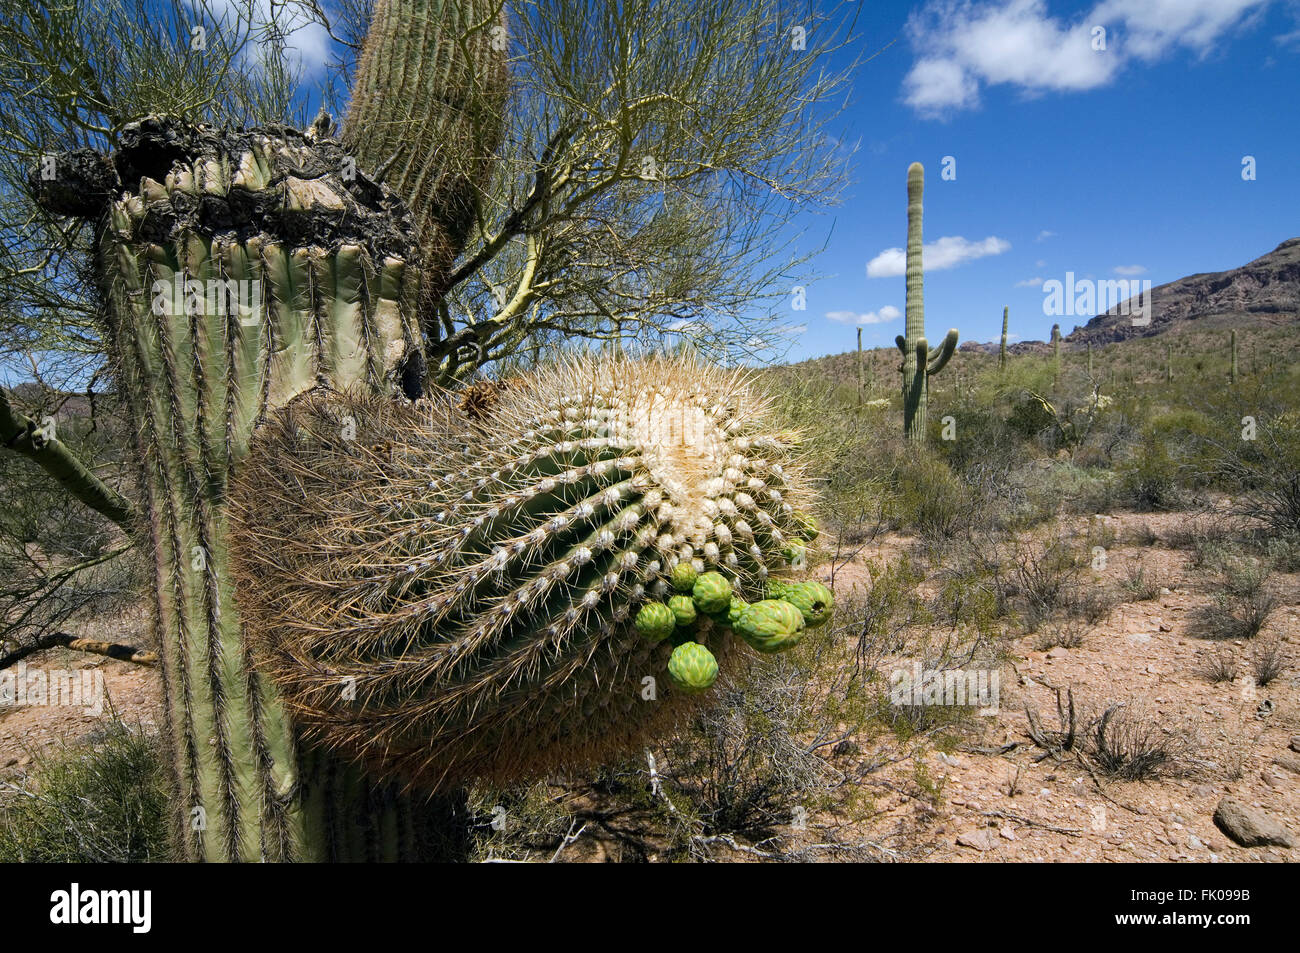 Saguaro cactus (Carnegiea gigantea / Cereus giganteus) showing buds in the Organ Pipe Cactus National Monument, Arizona, USA Stock Photo